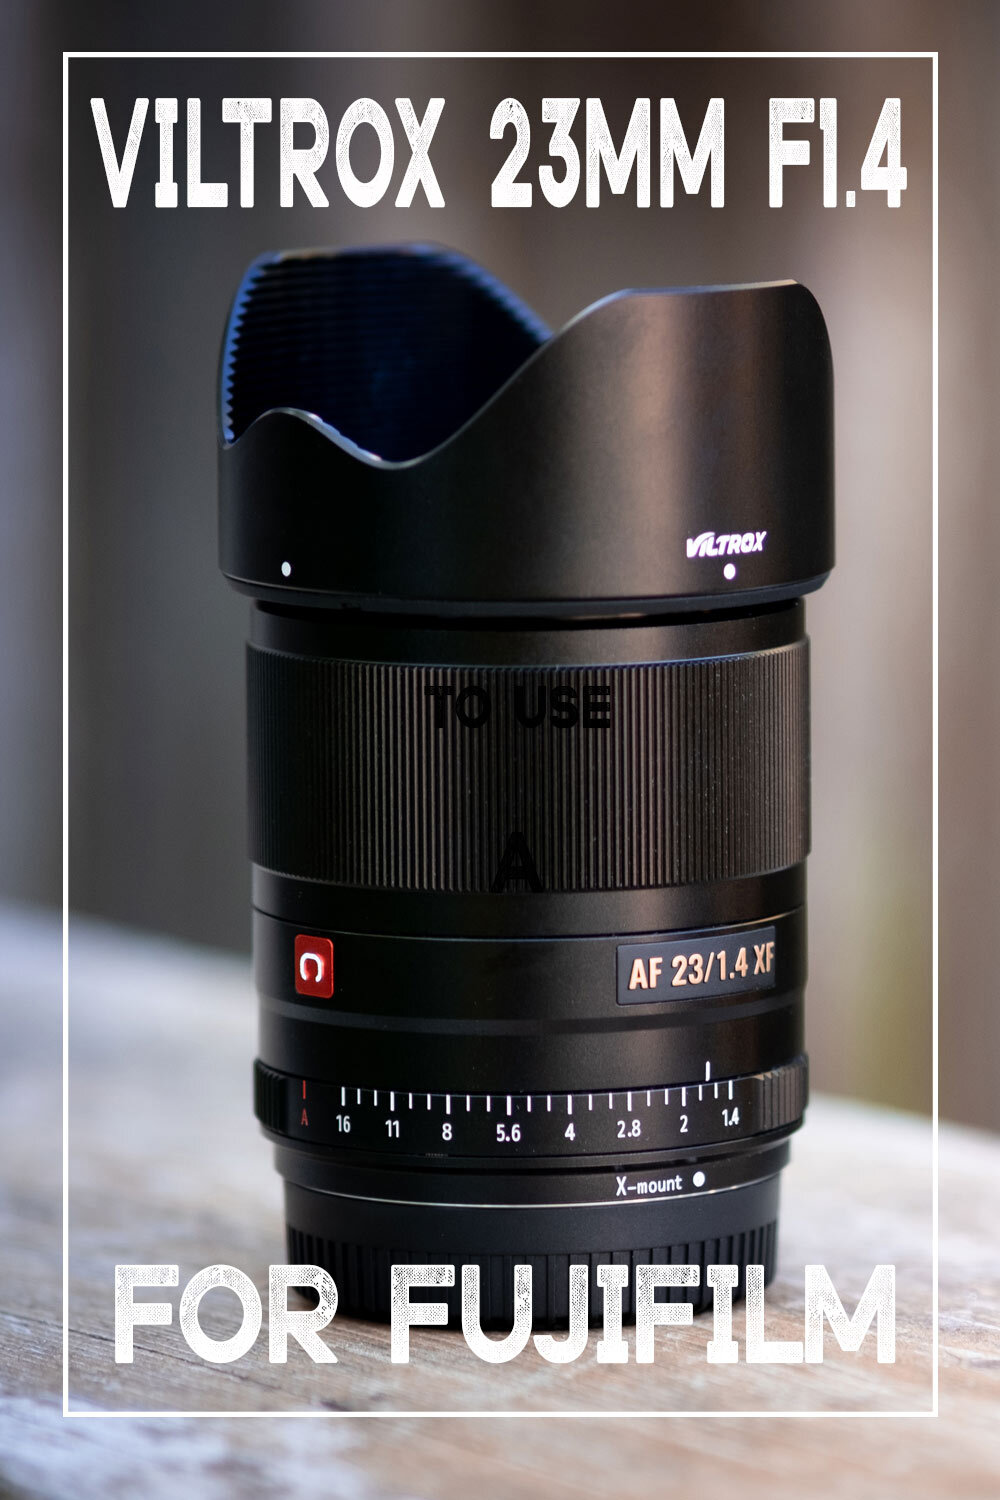 Viltrox 23mm F1.4 lens review — IAN WORTH